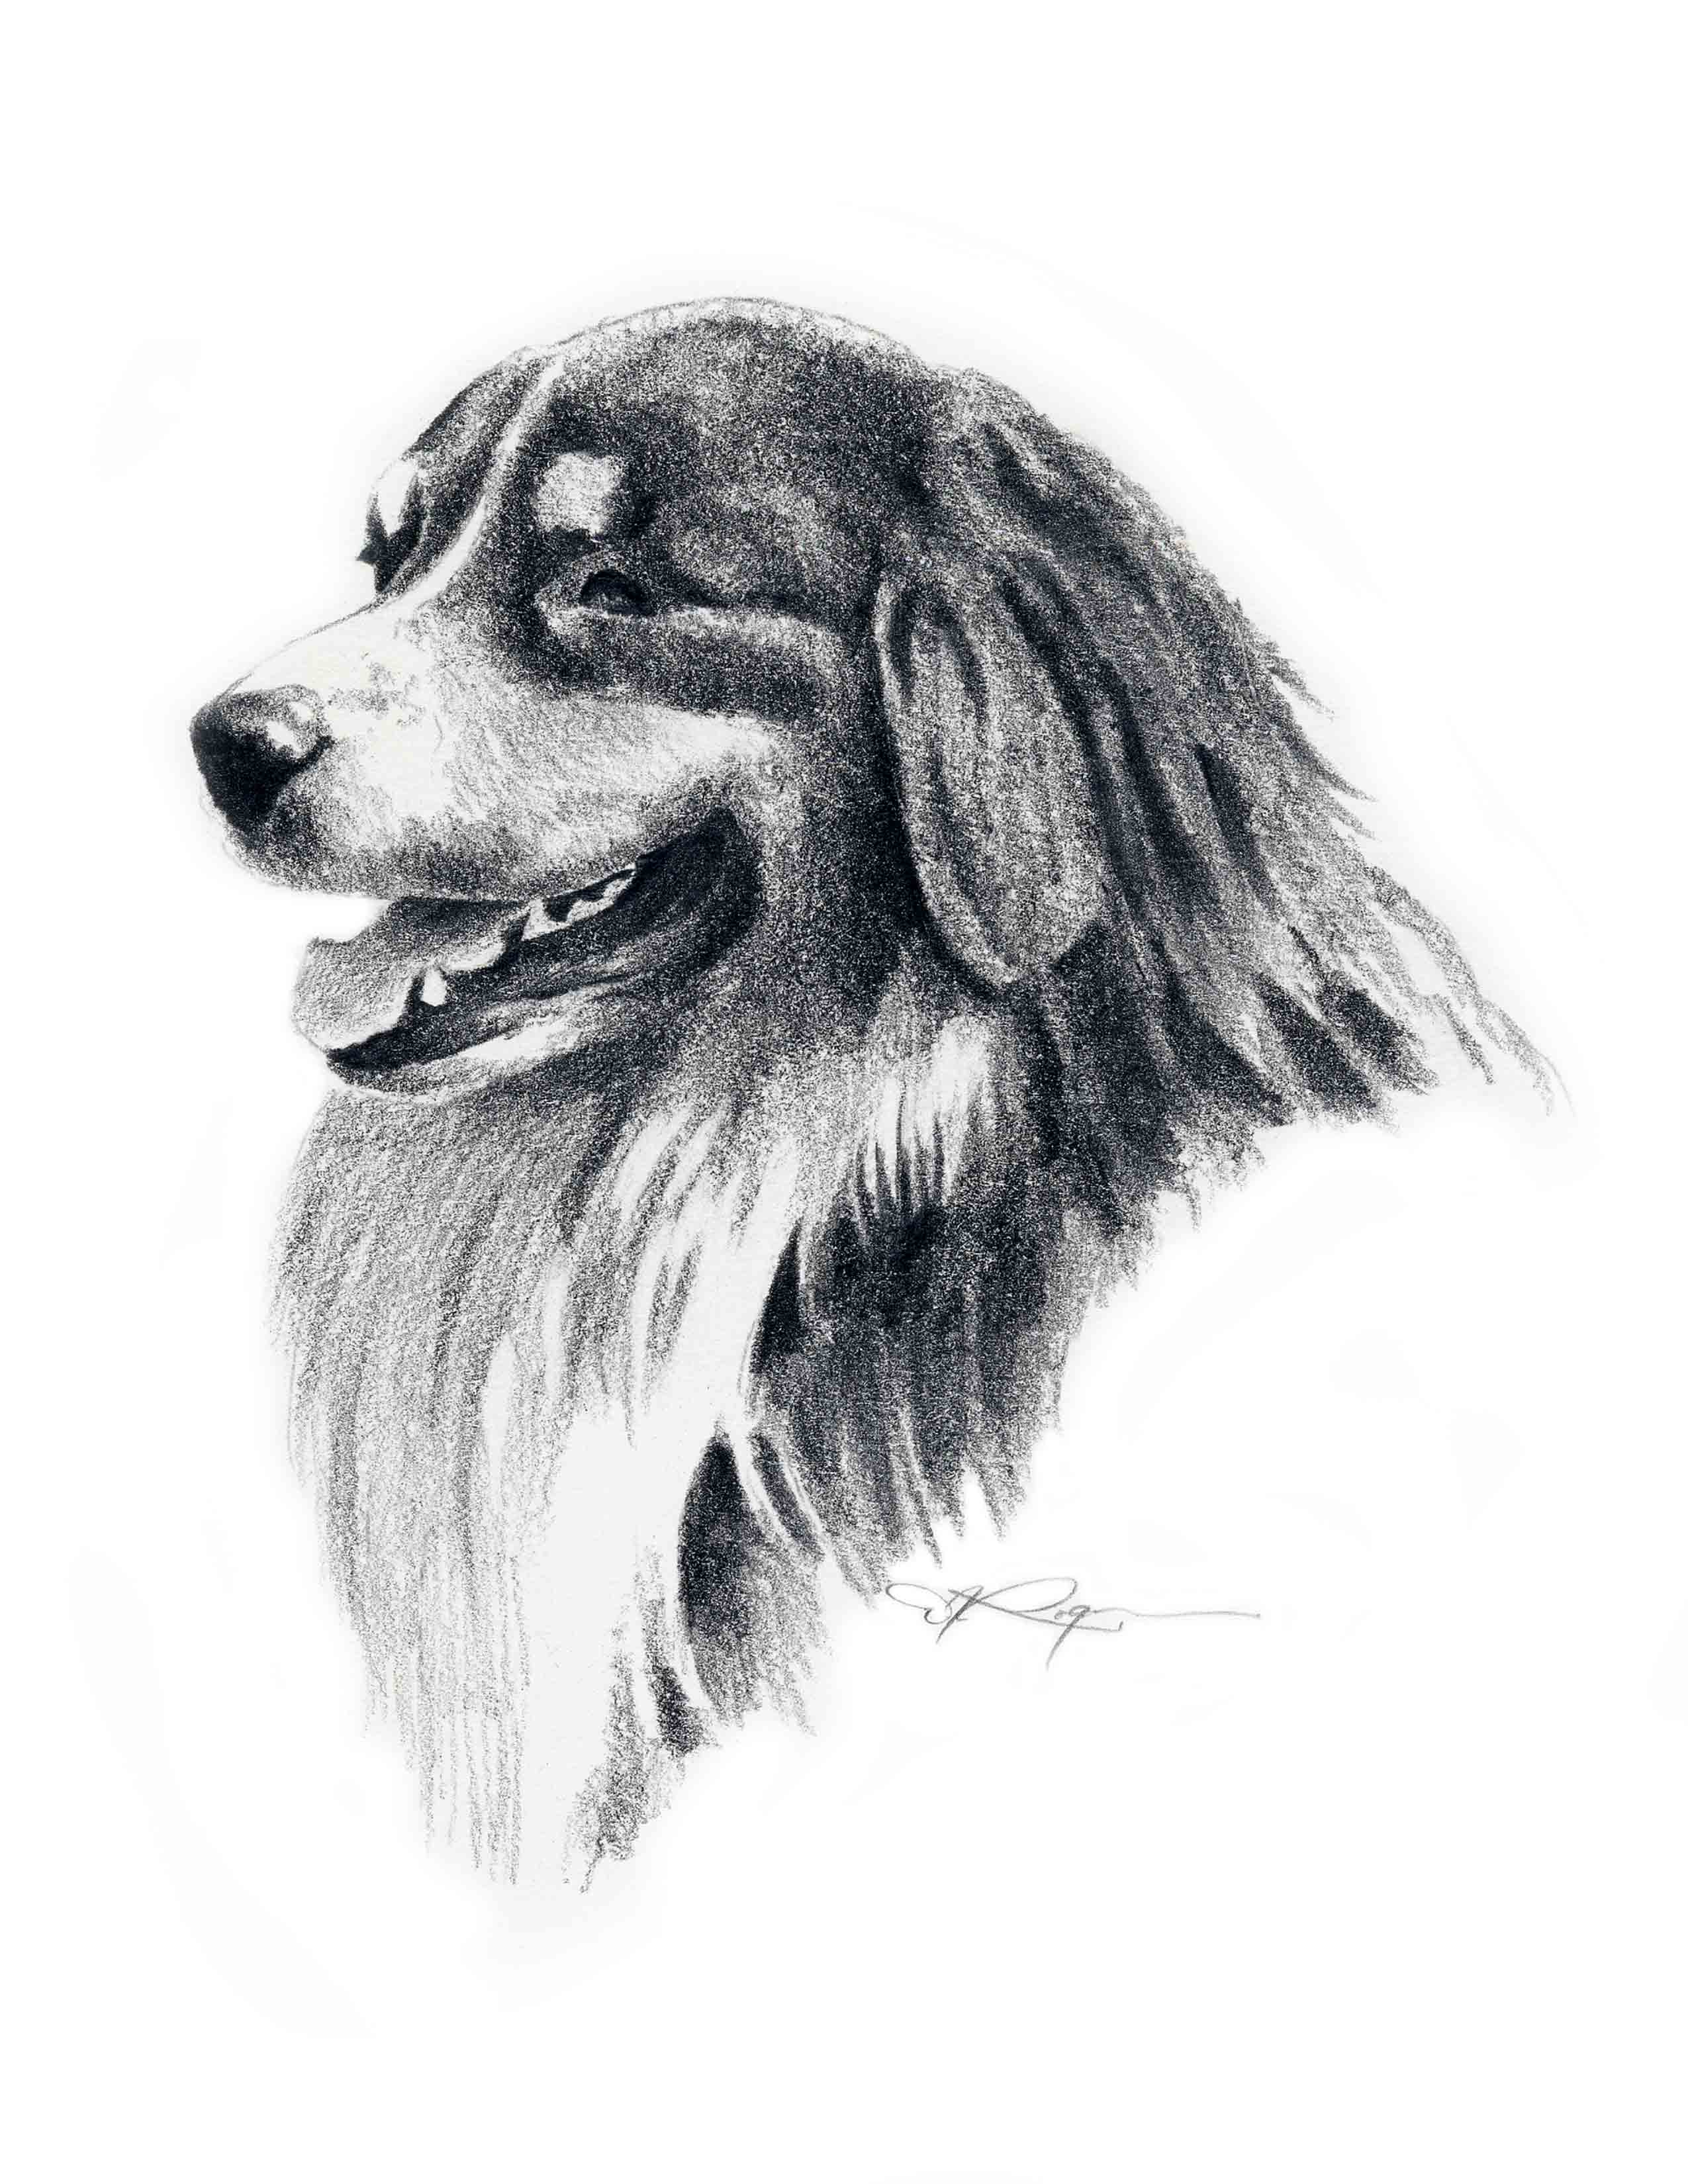 Australian Shepherd Pencil Dog Art Print by Artist DJ Rogers